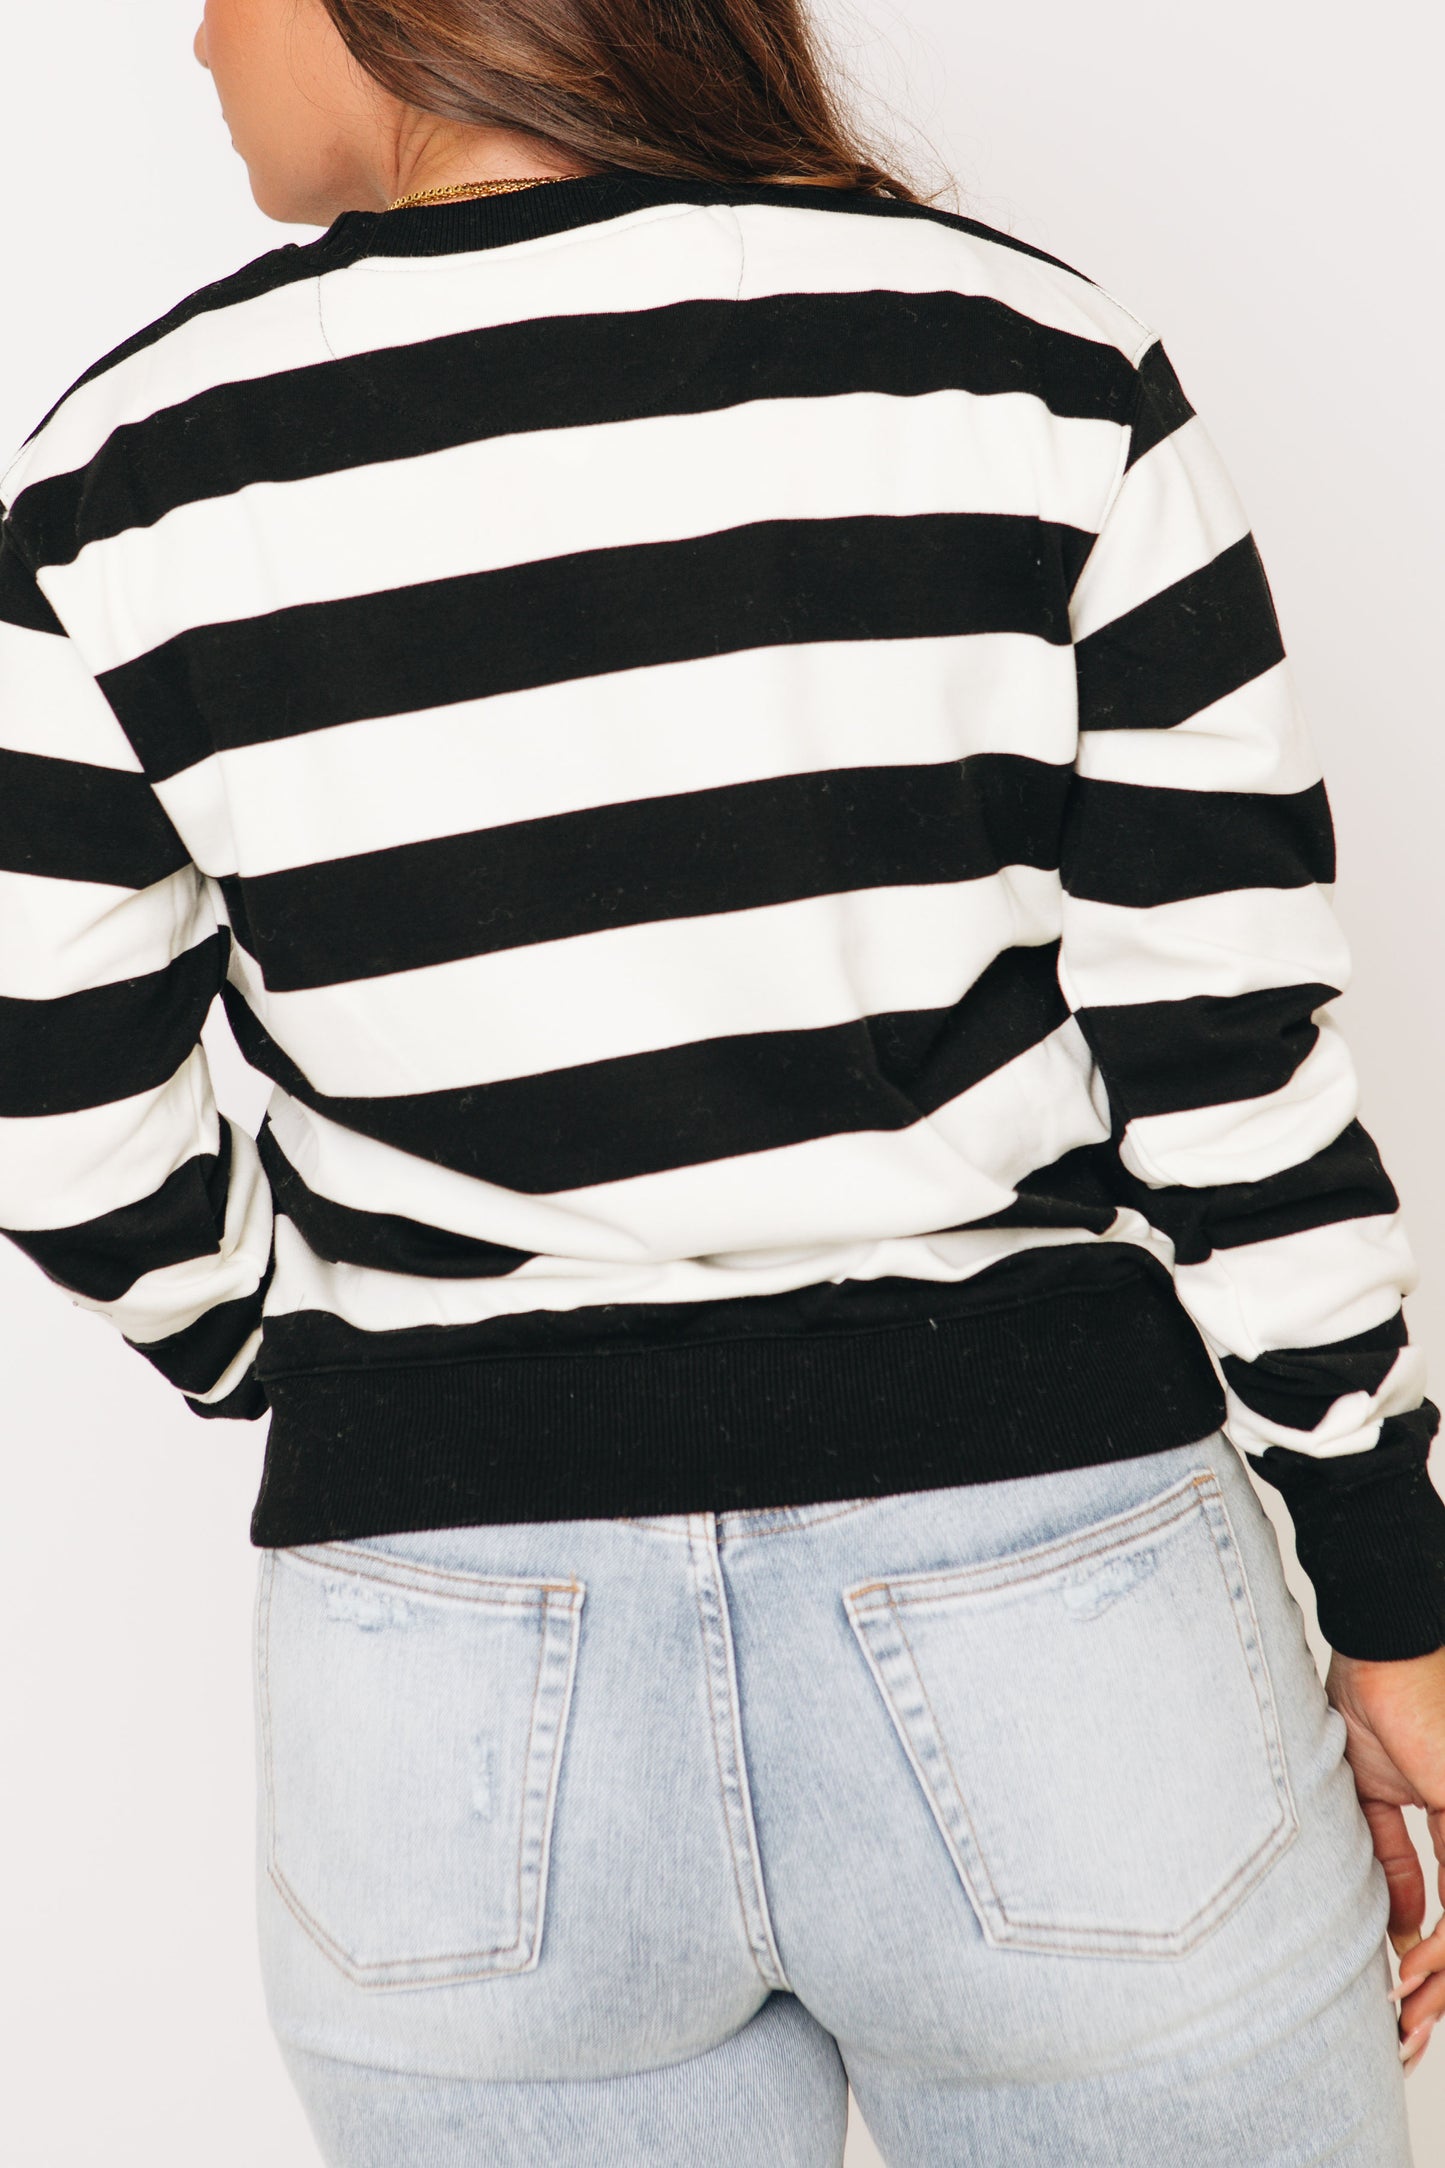 Love Stripe Graphic Sweatshirt (S-L)